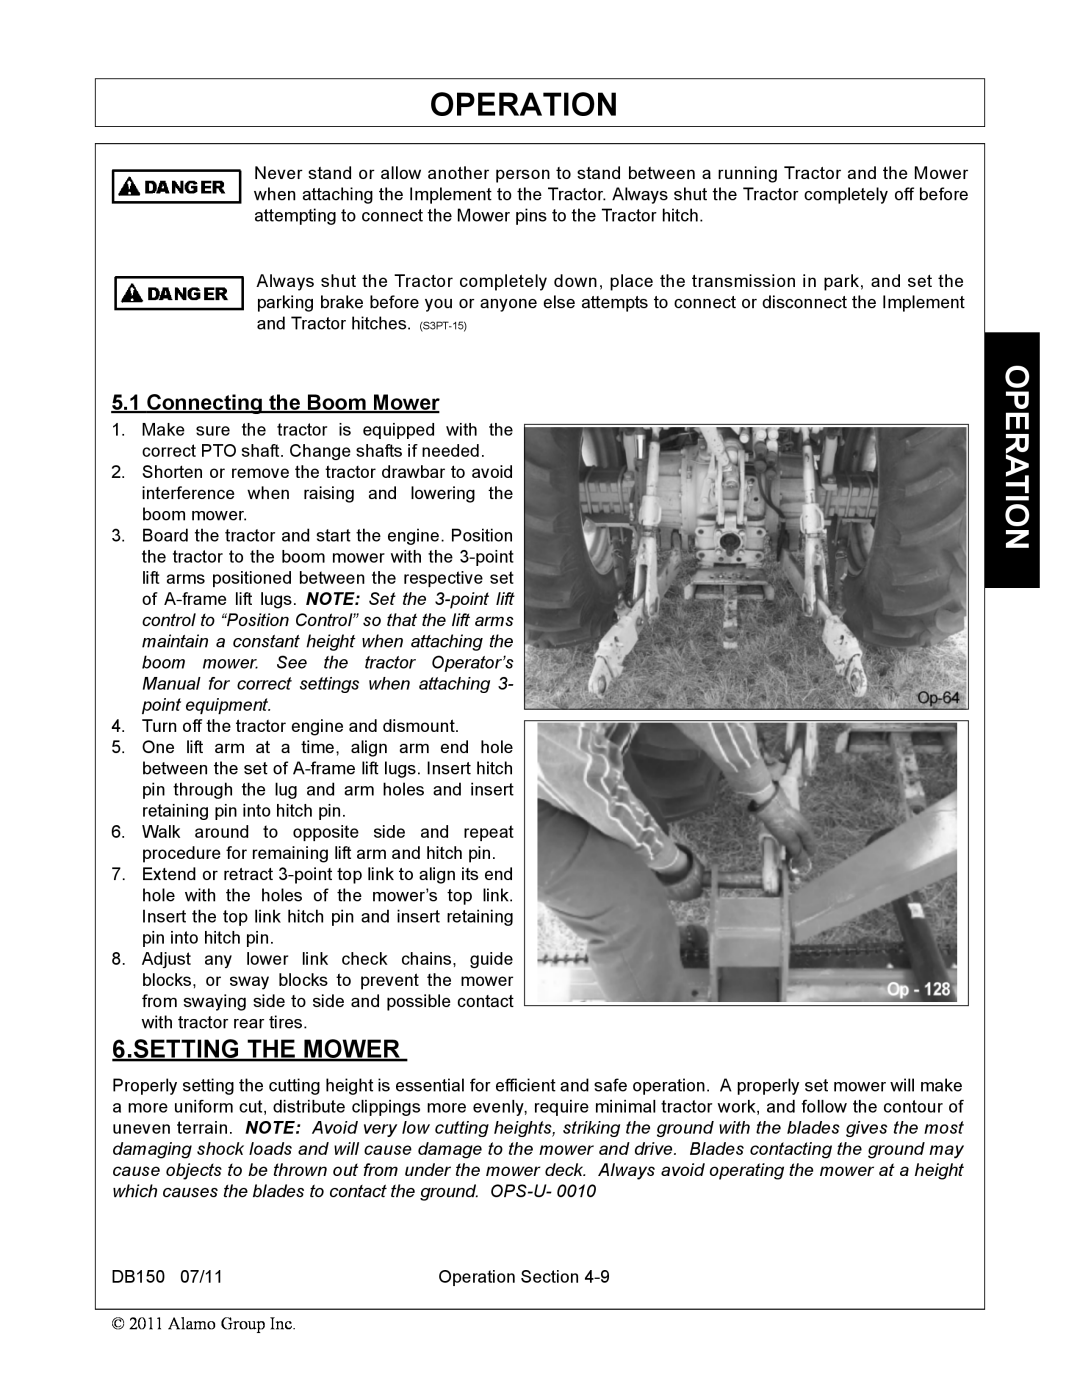 Rhino Mounts DB150 manual Setting The Mower, Operation, Connecting the Boom Mower 